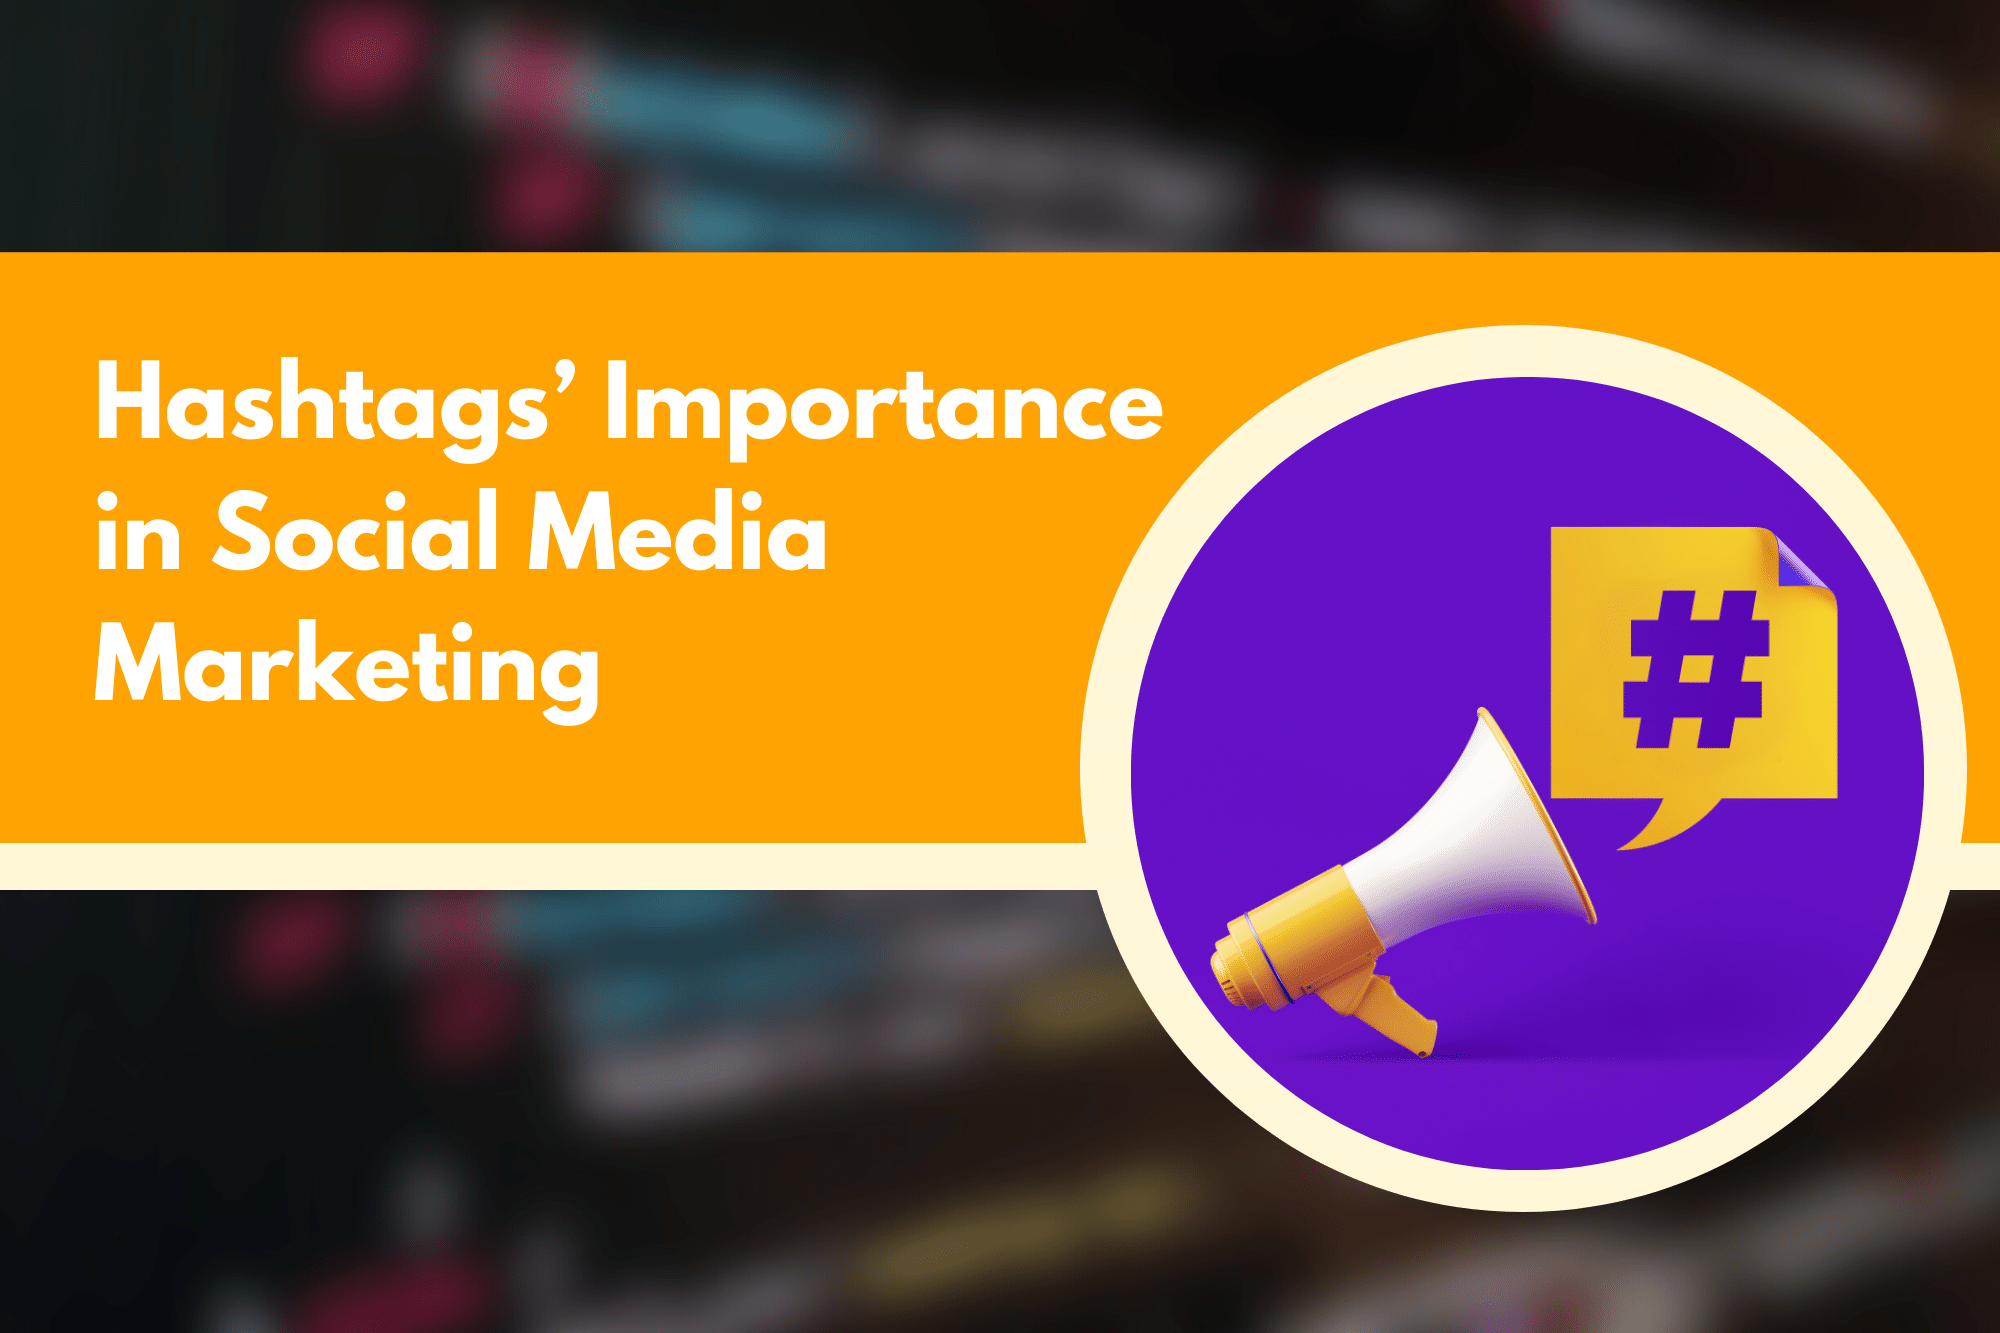 Hashtags’ Importance in Social Media Marketing